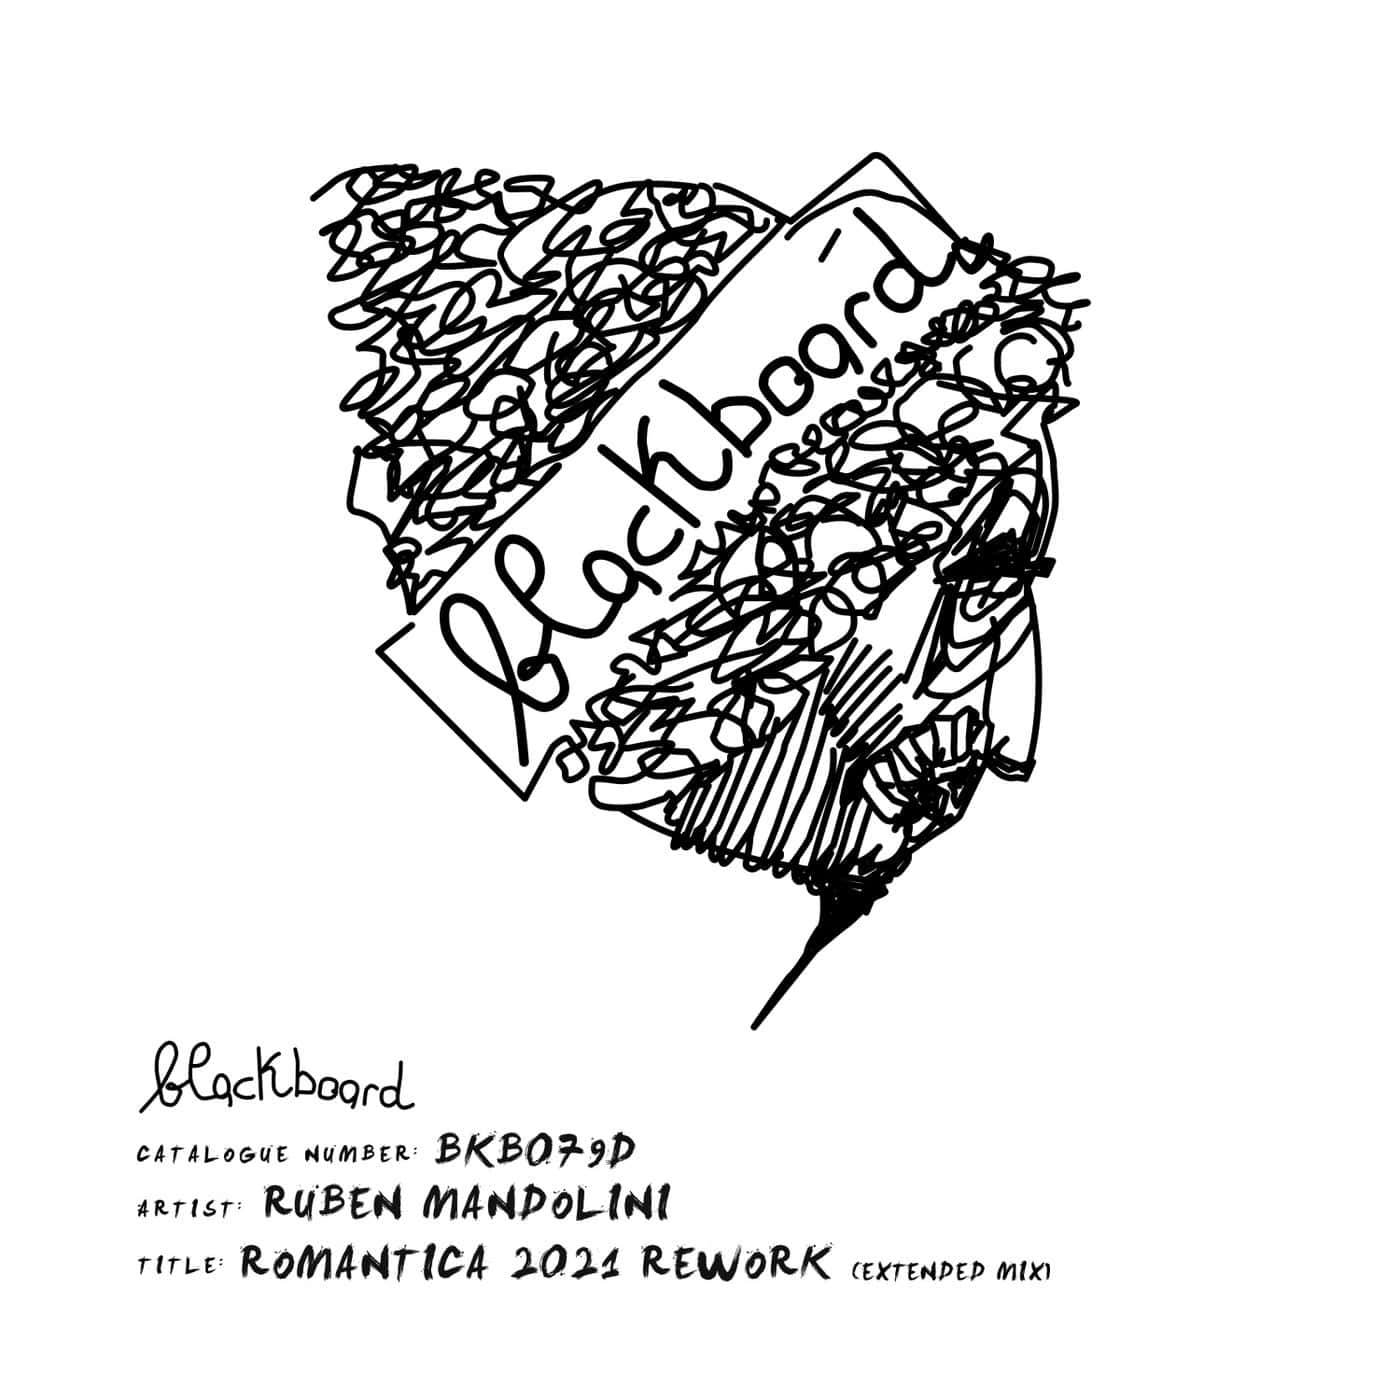 image cover: Ruben Mandolini - Romantica (2021 Extended Rework) / BKB079D